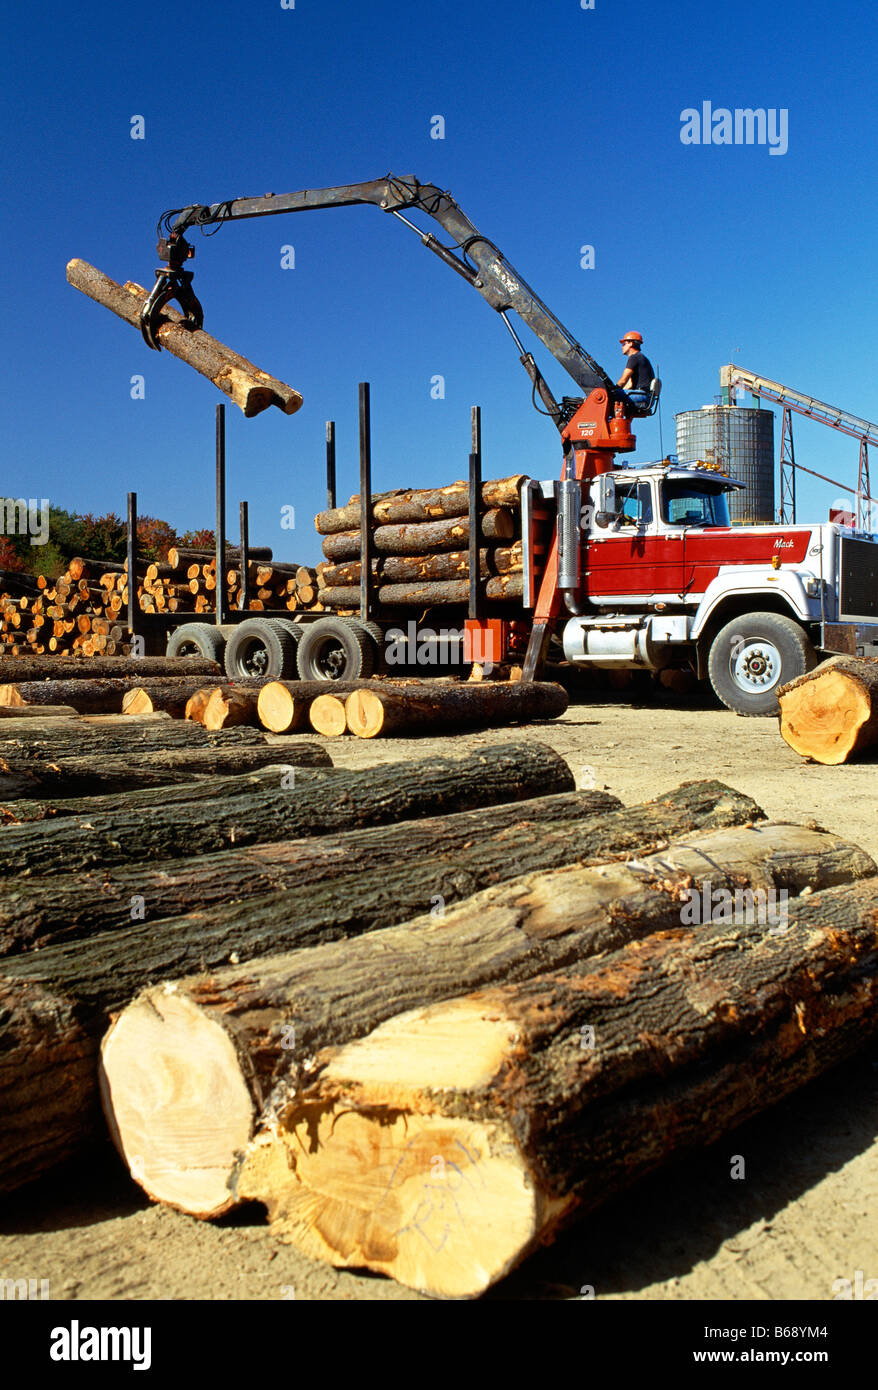 High Grade Hardwood Logs For Sale - Weaber Lumber